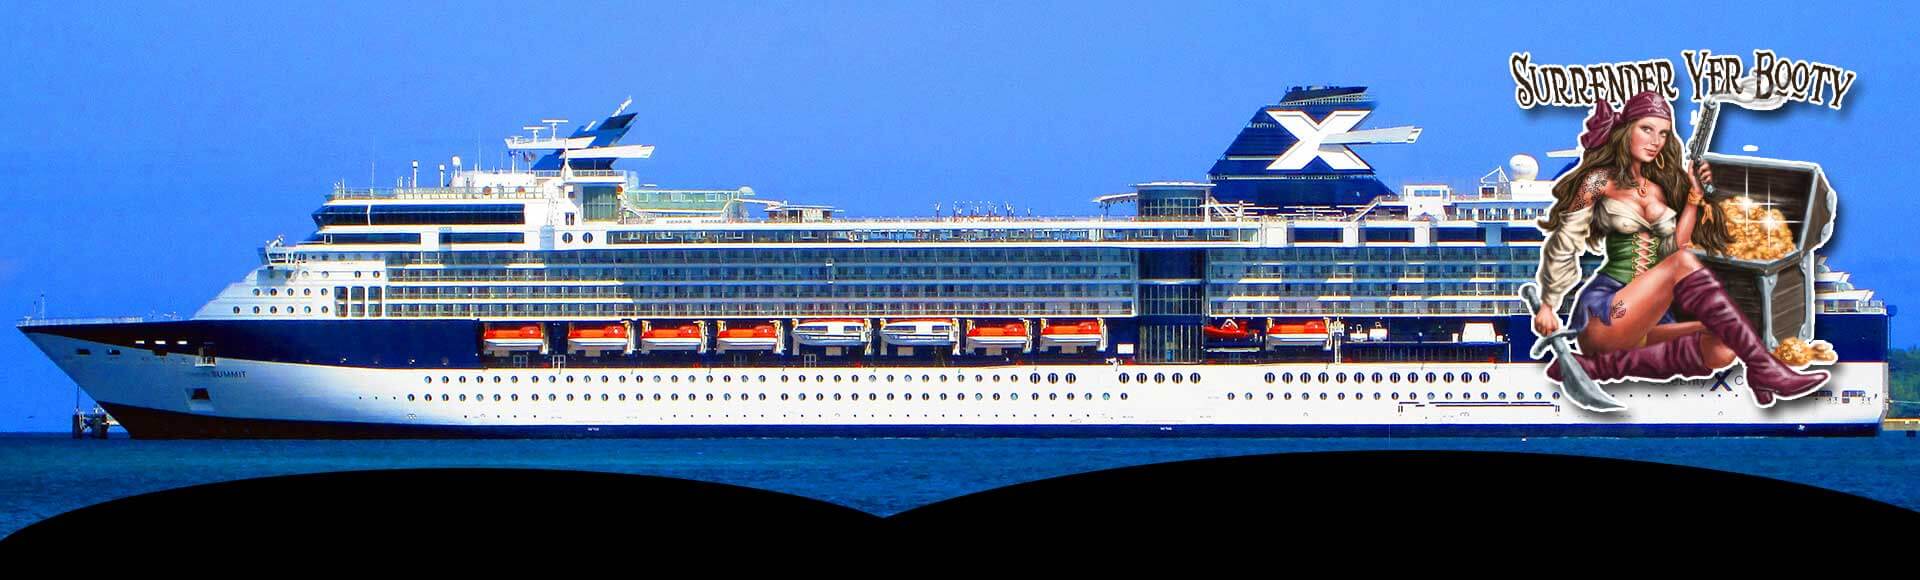 Celebrity Infinity Cruise Ship